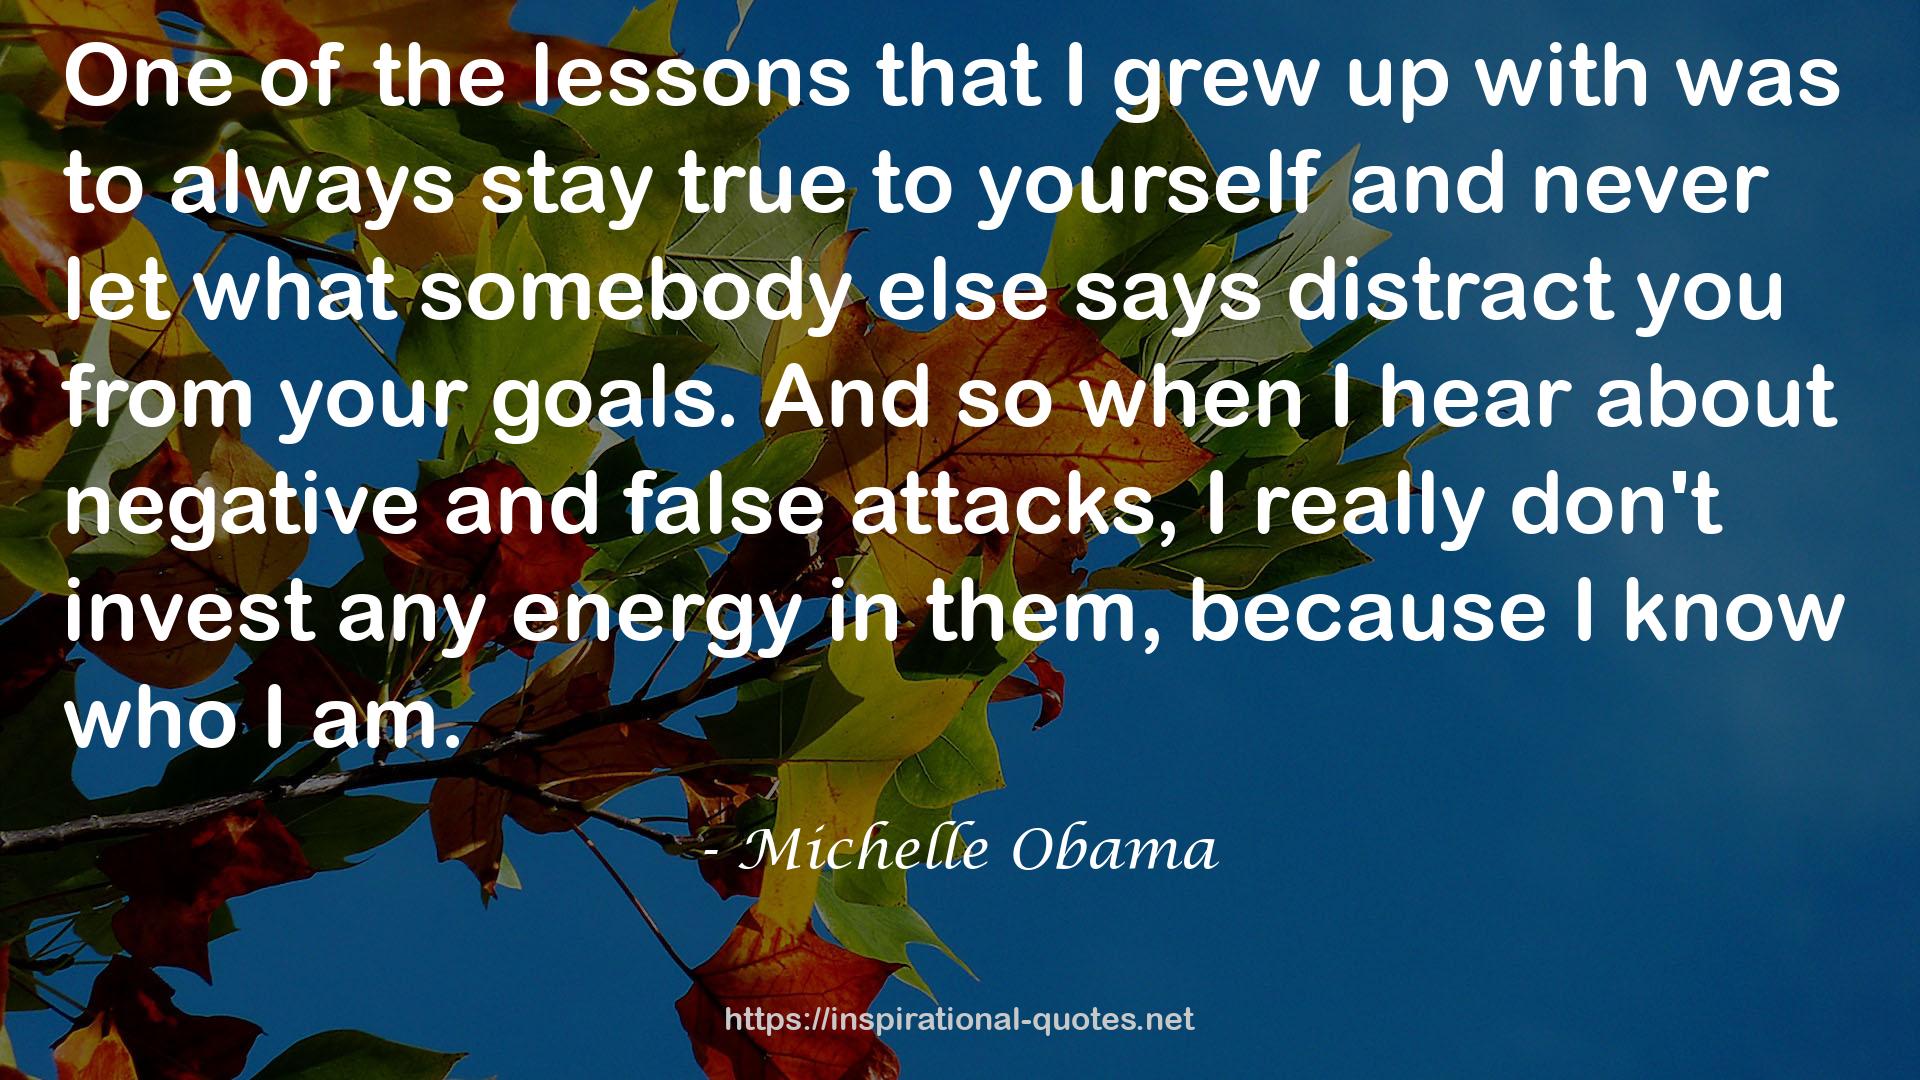 Michelle Obama QUOTES